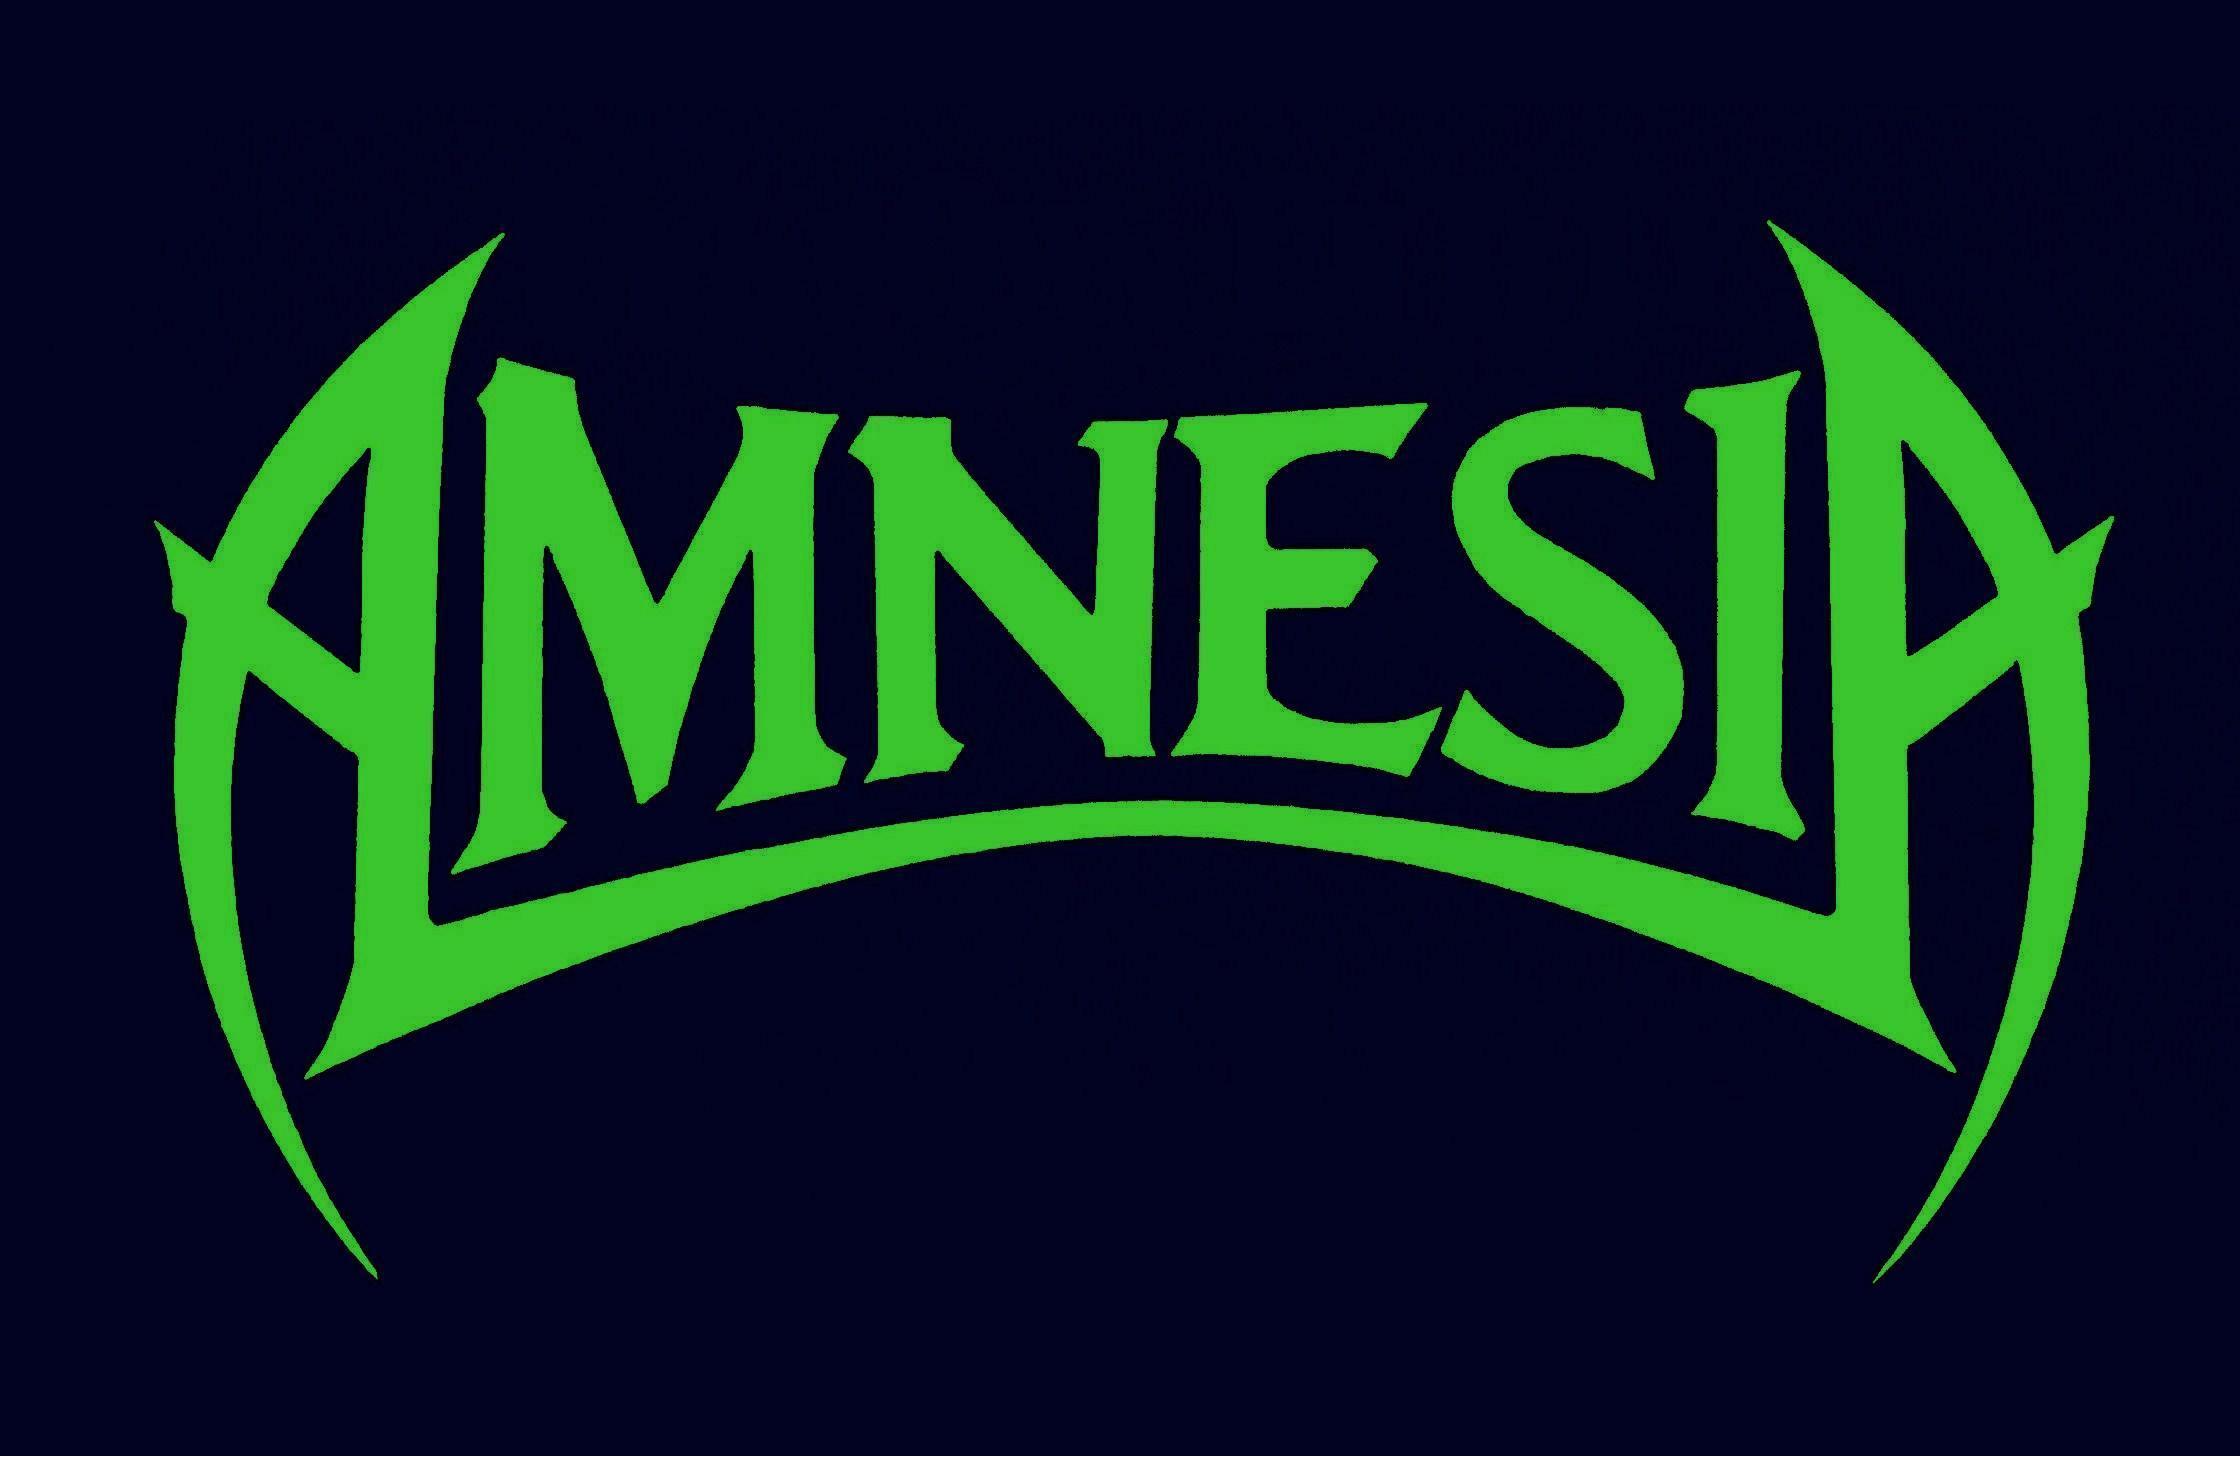 social amnesia logo